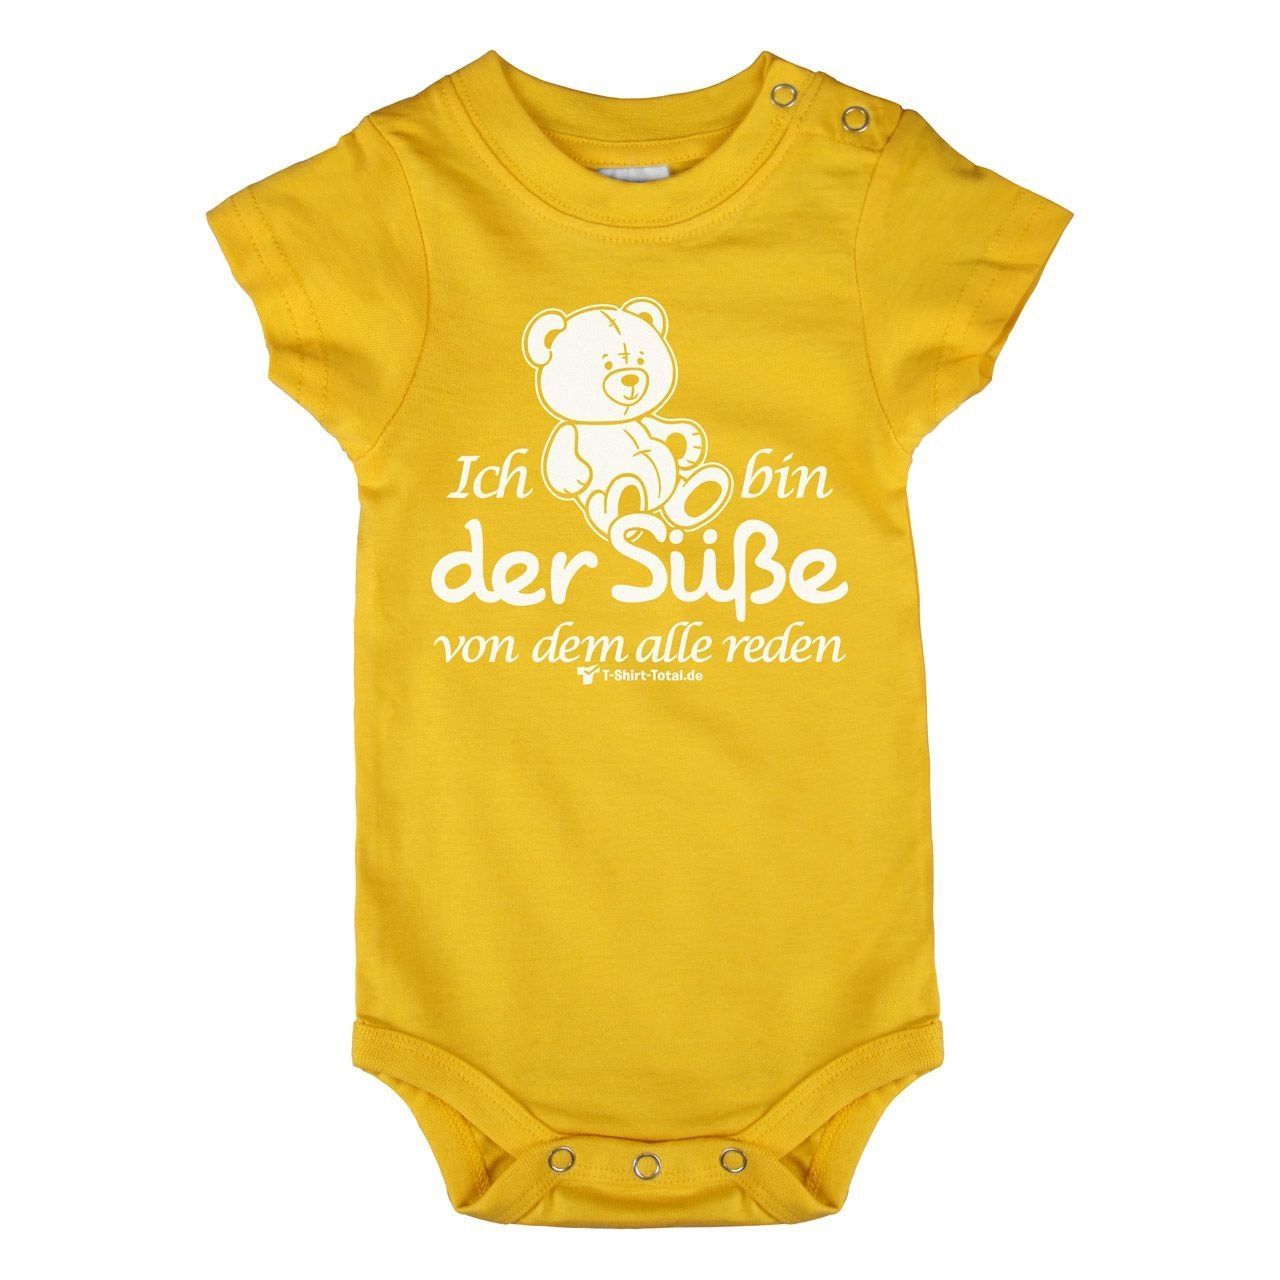 Der Süße Baby Body Kurzarm gelb 56 / 62